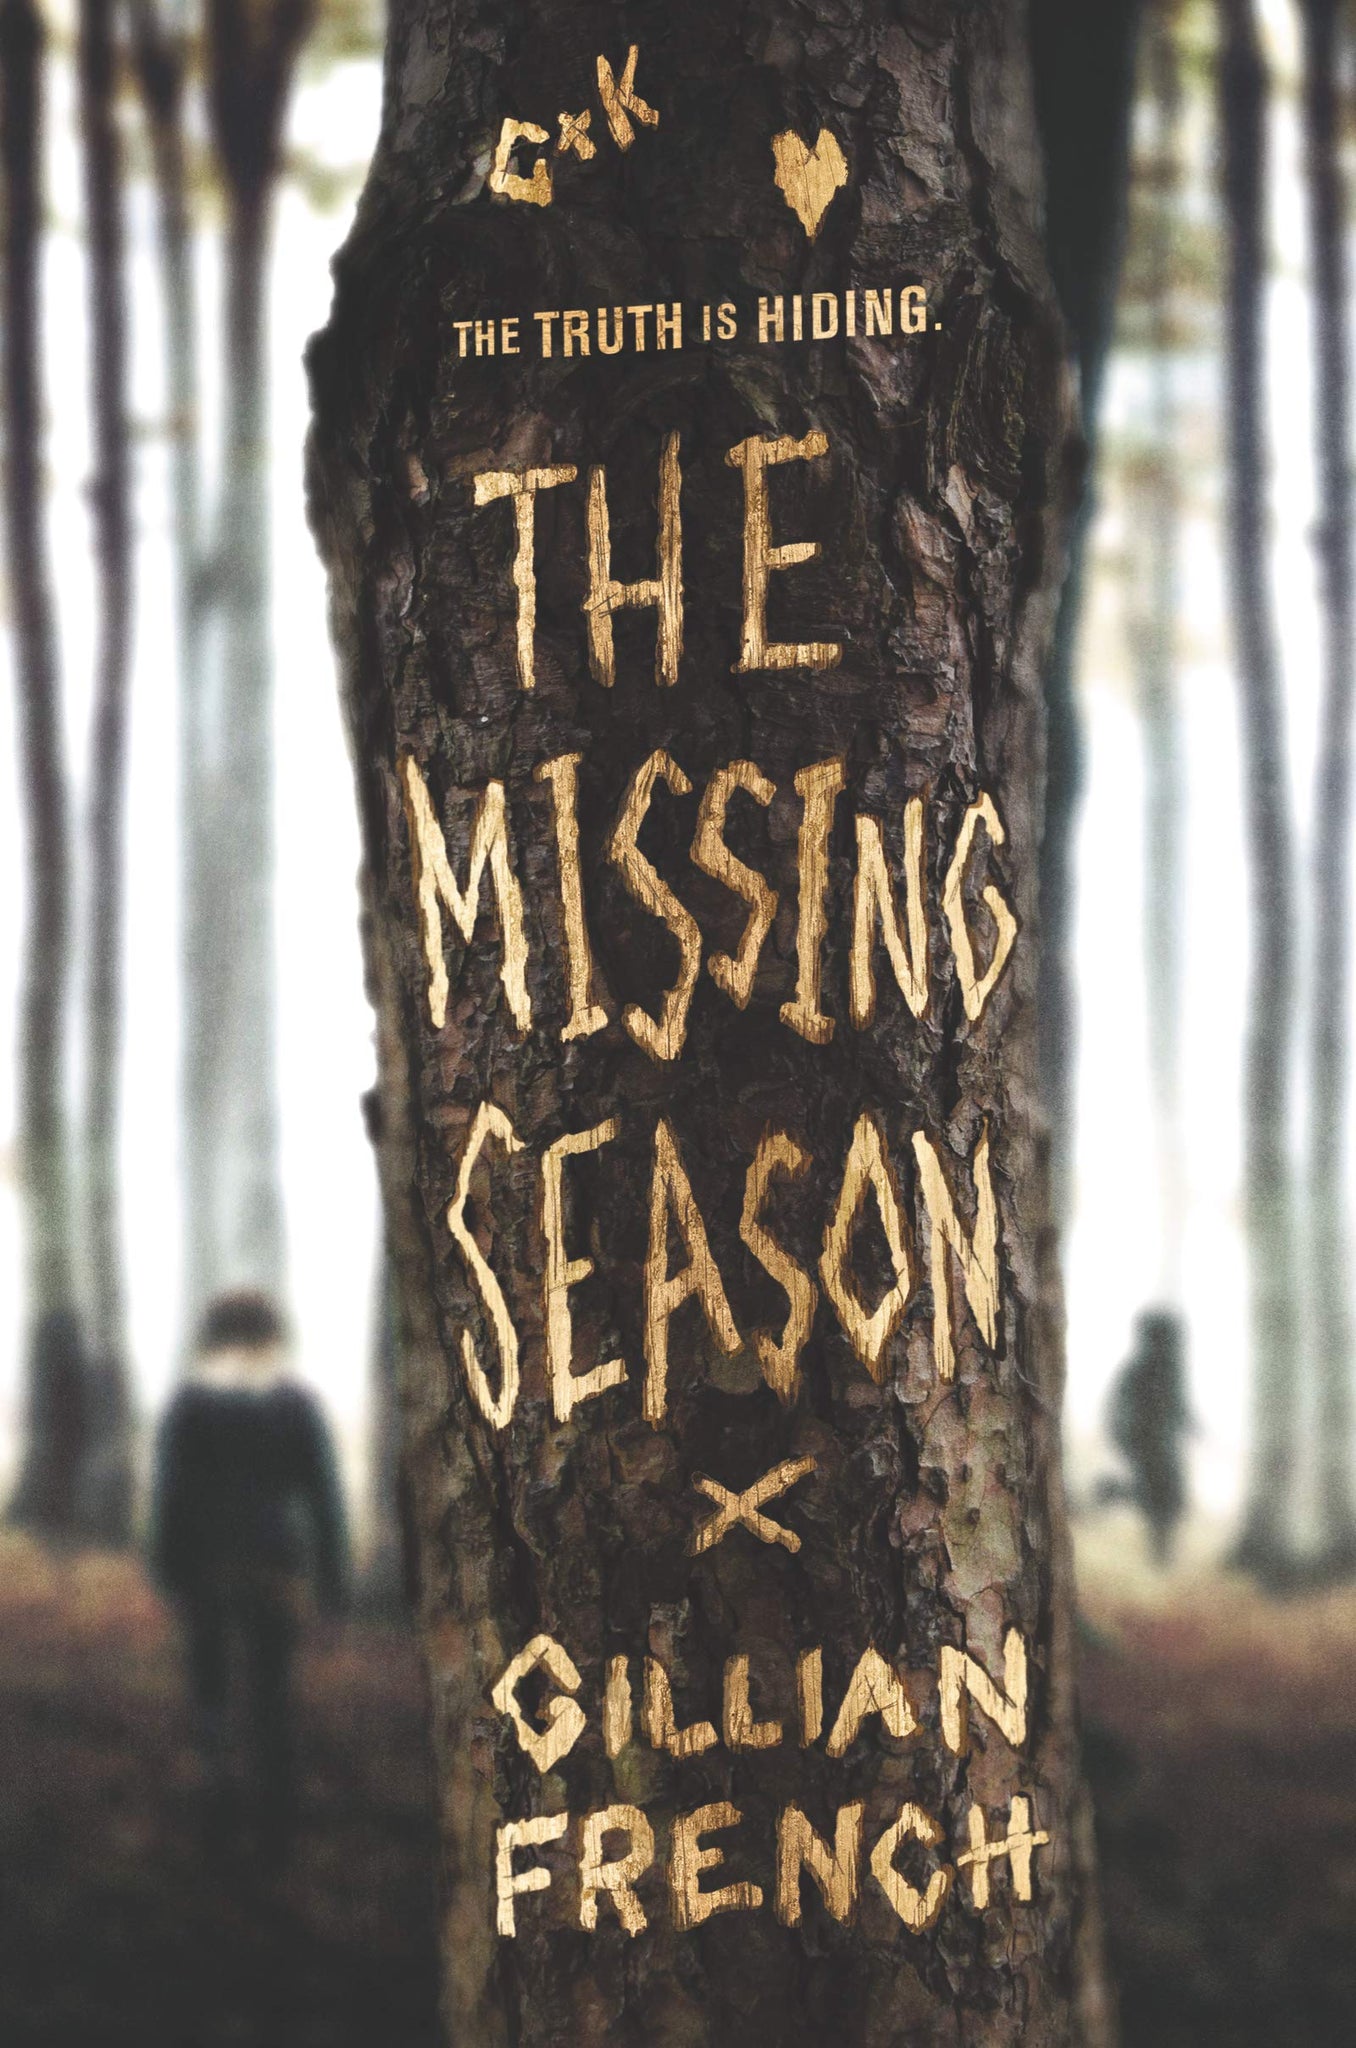 The Missing Season (Hardcover)